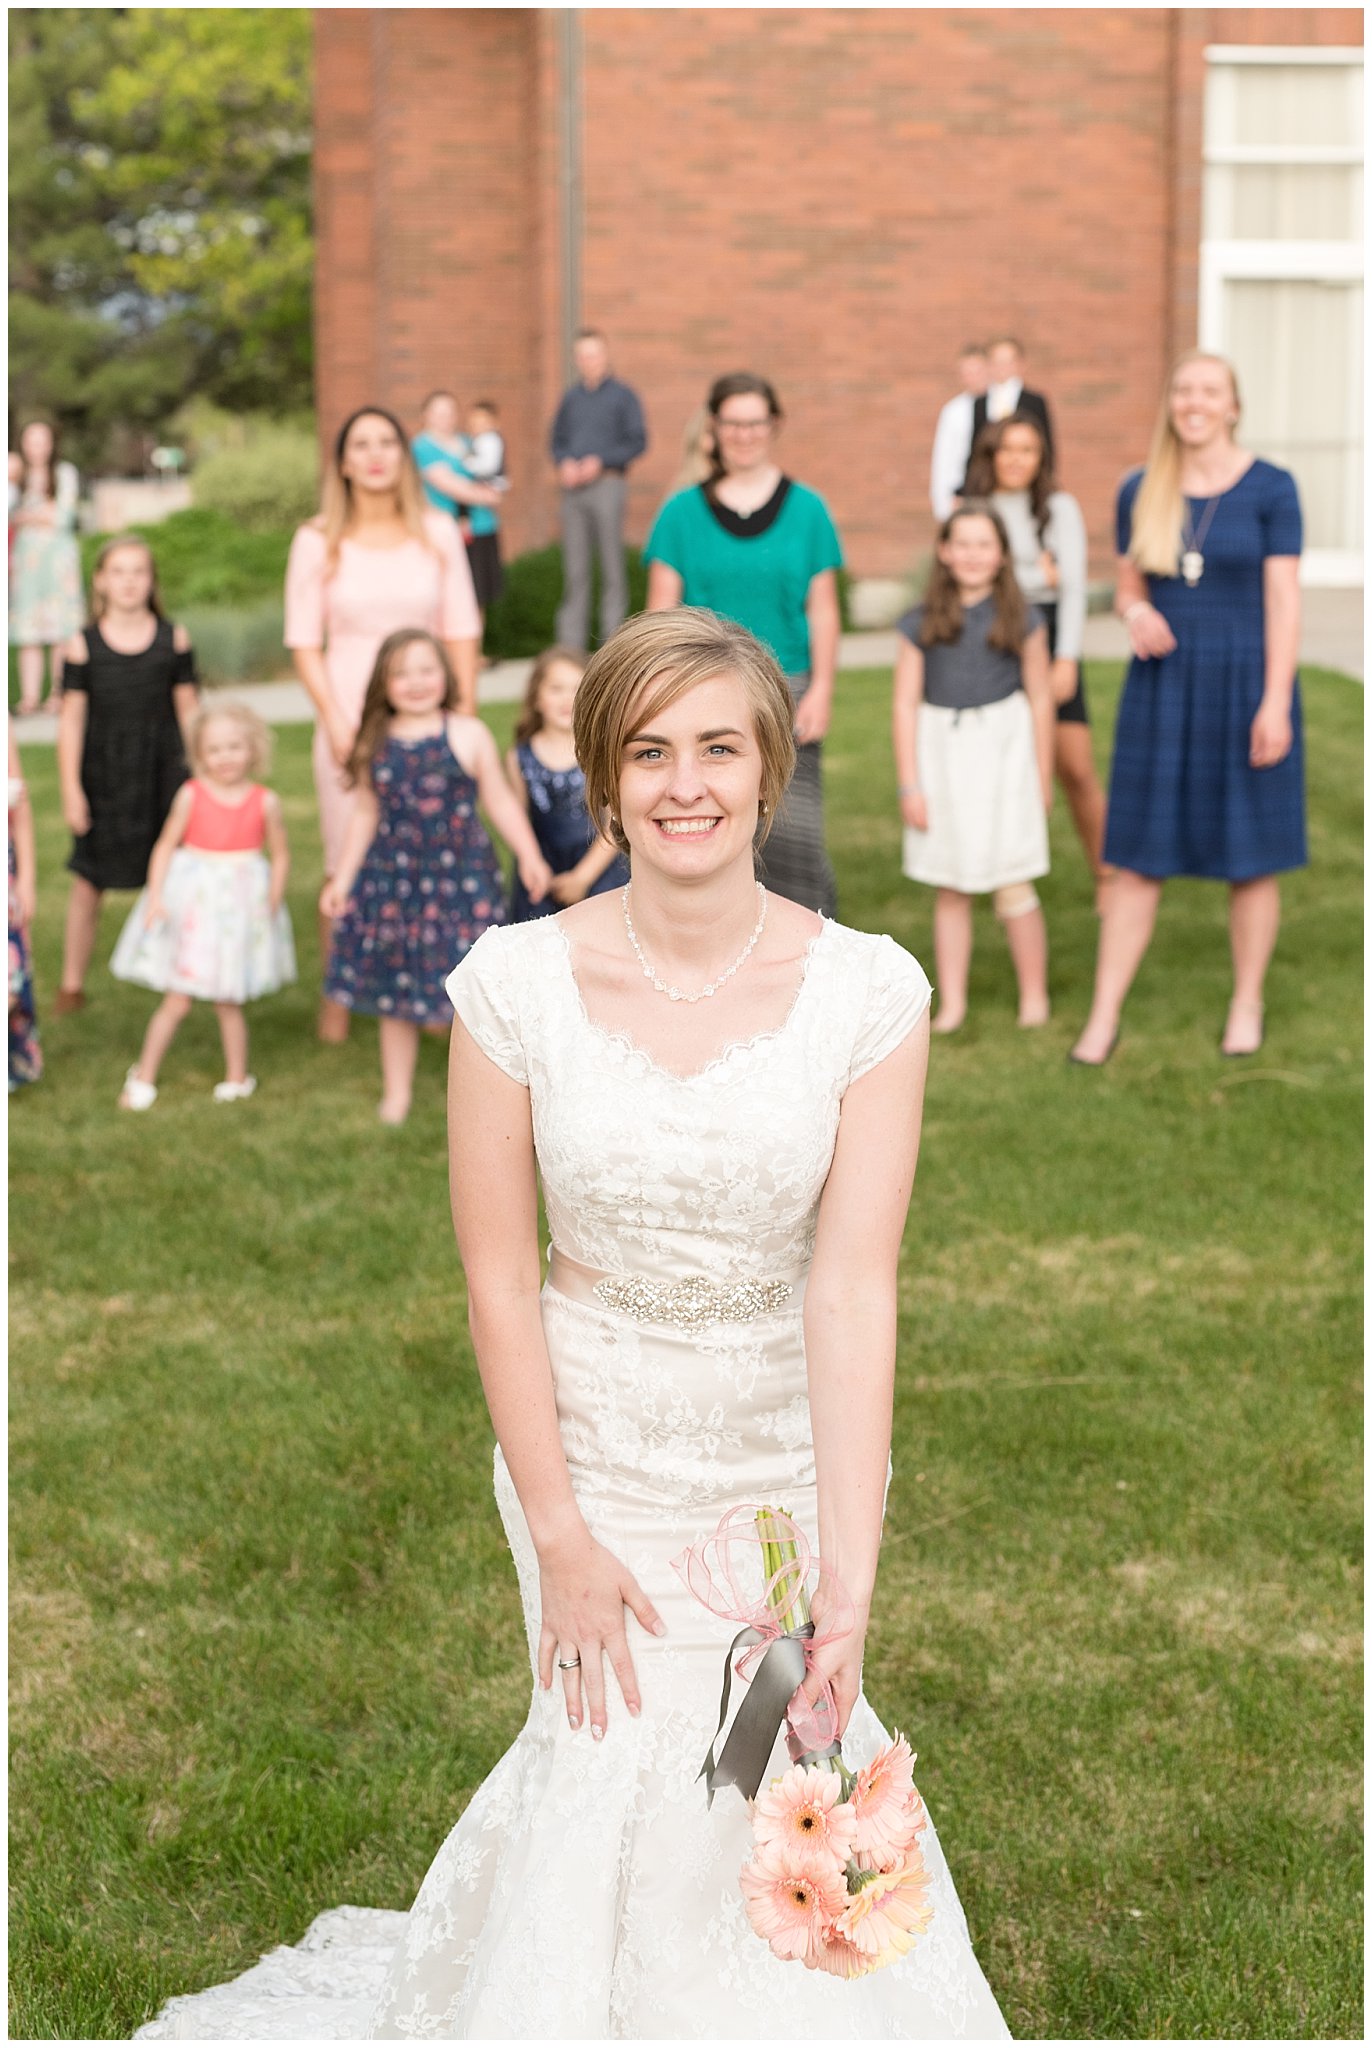 Salt Lake LDS wedding reception | Bouquet toss | Coral and grey wedding